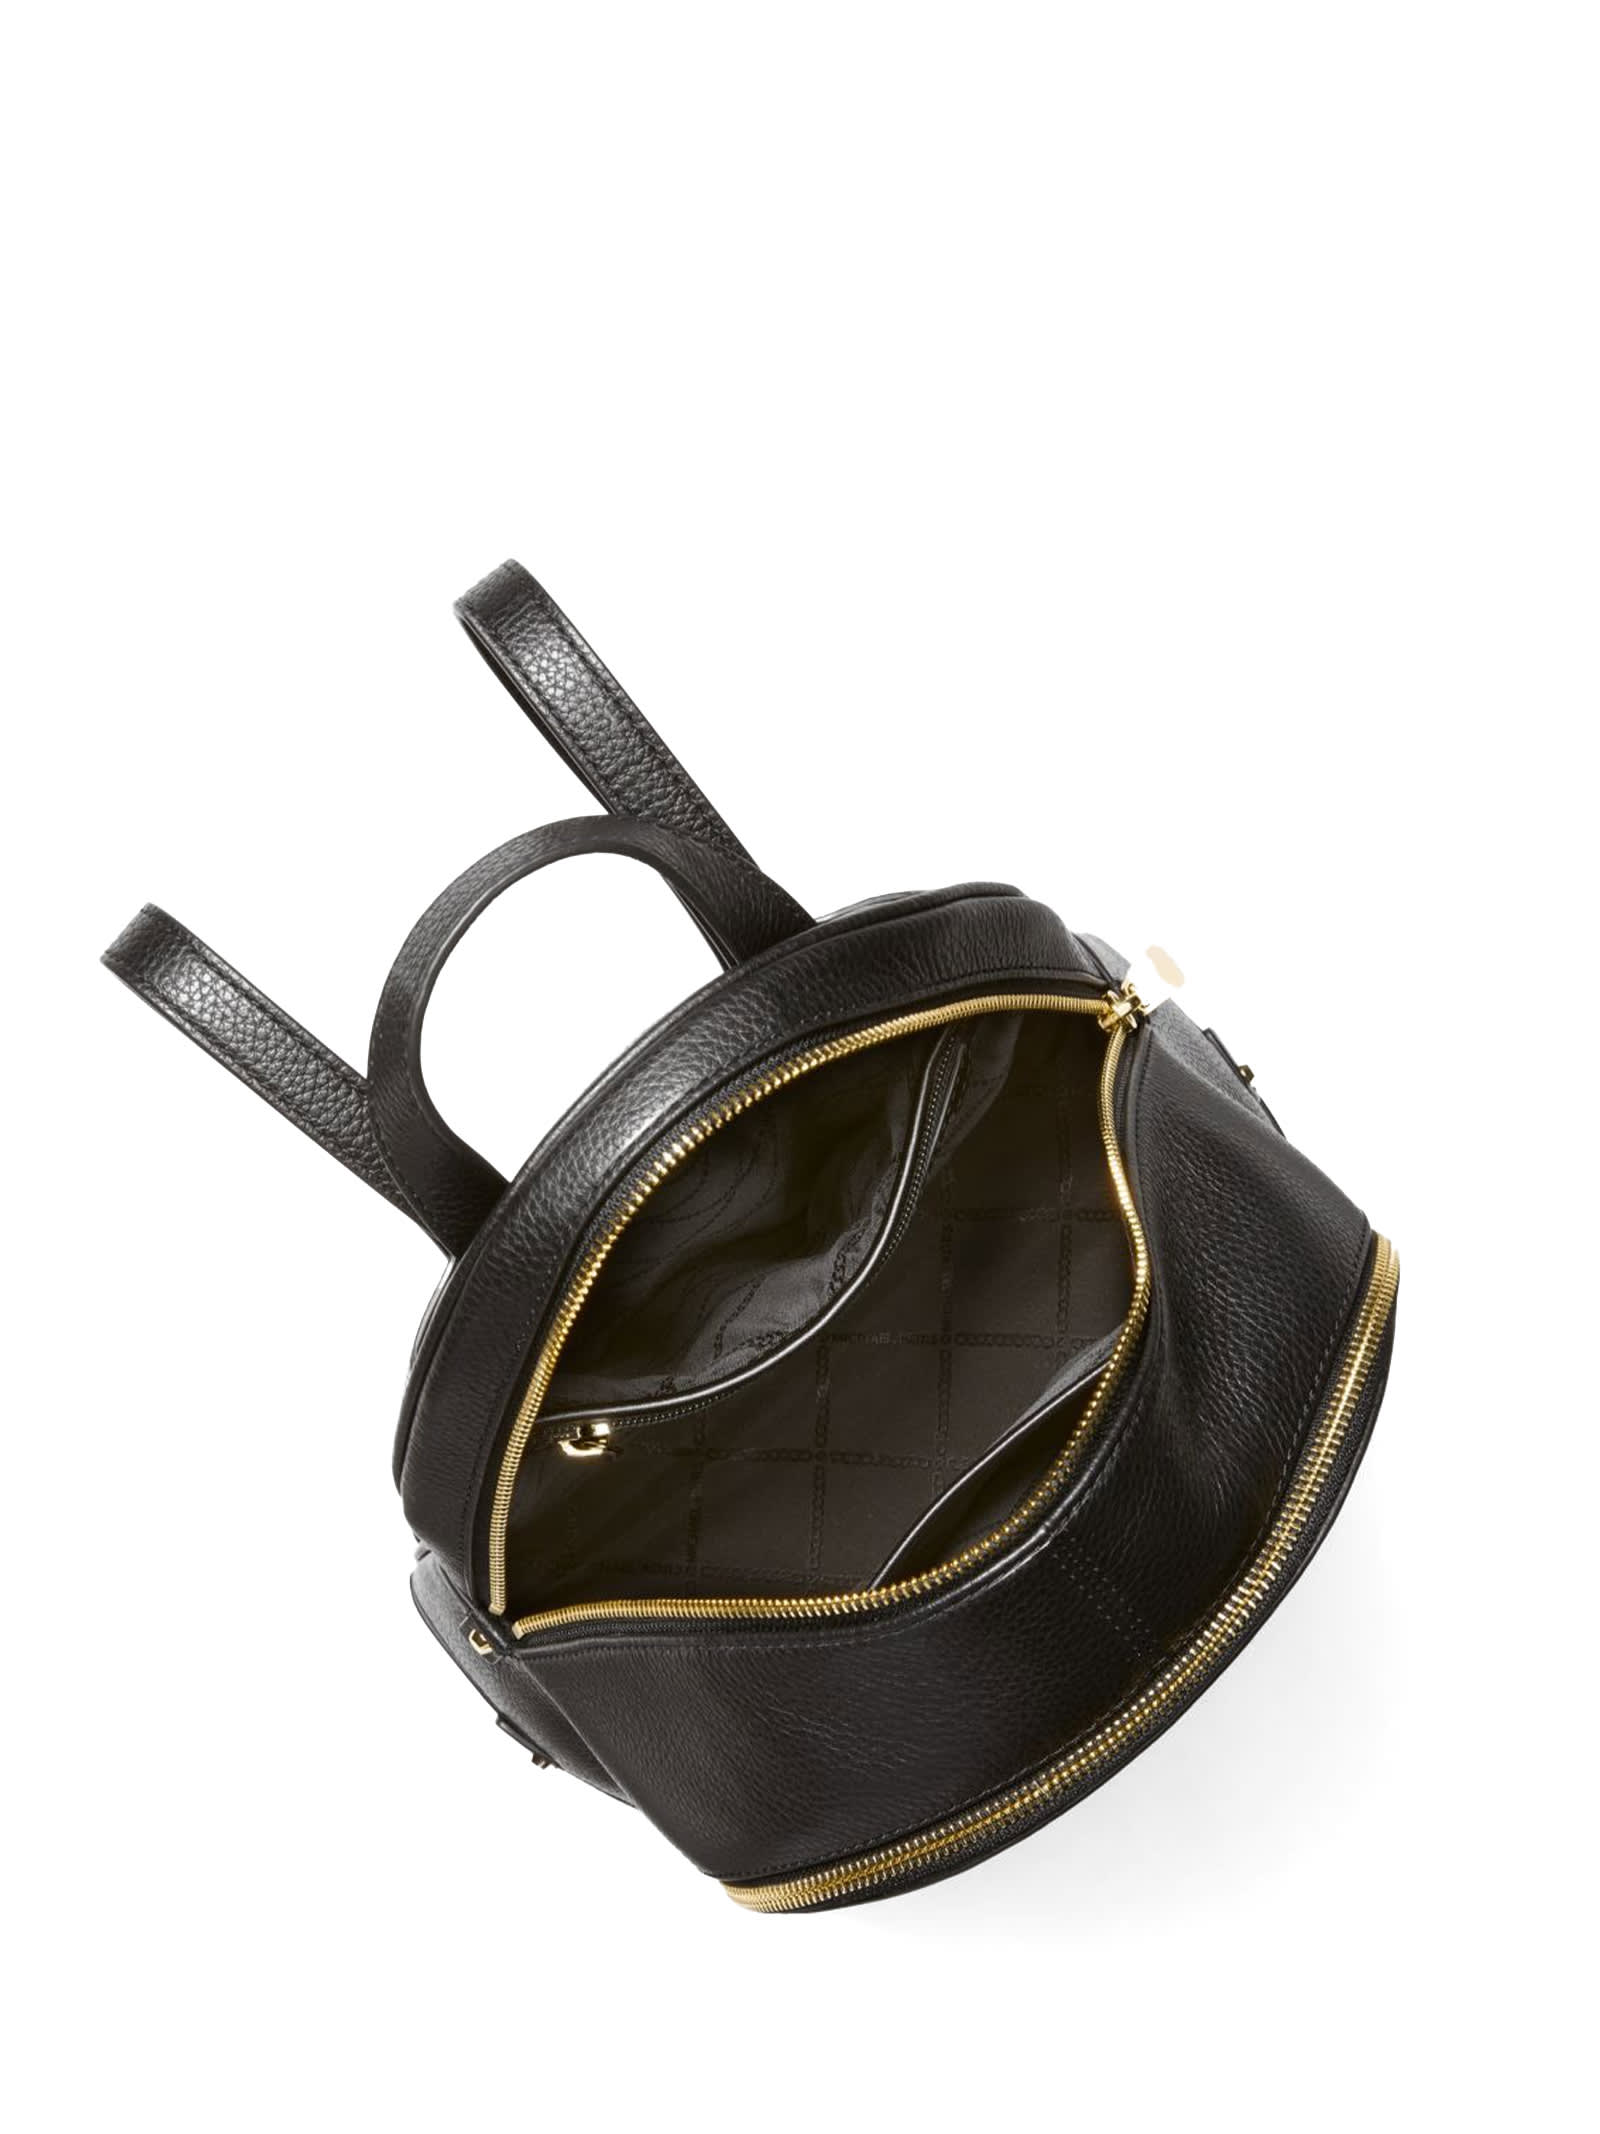 Shop Michael Kors Rhea Medium Leather Backpack In Black